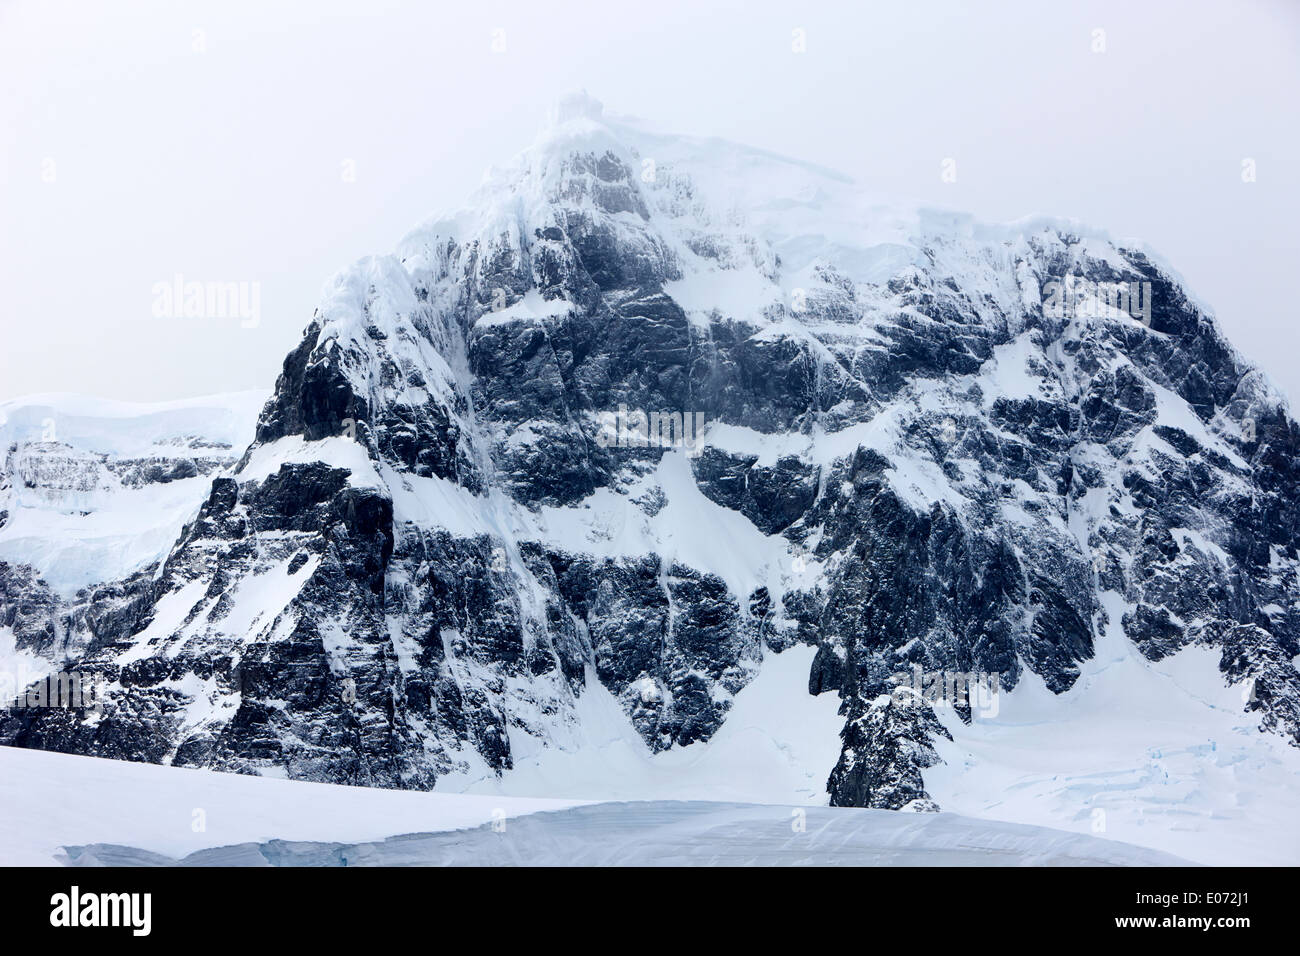 luigi peak fief range wiencke island Antarctica Stock Photo